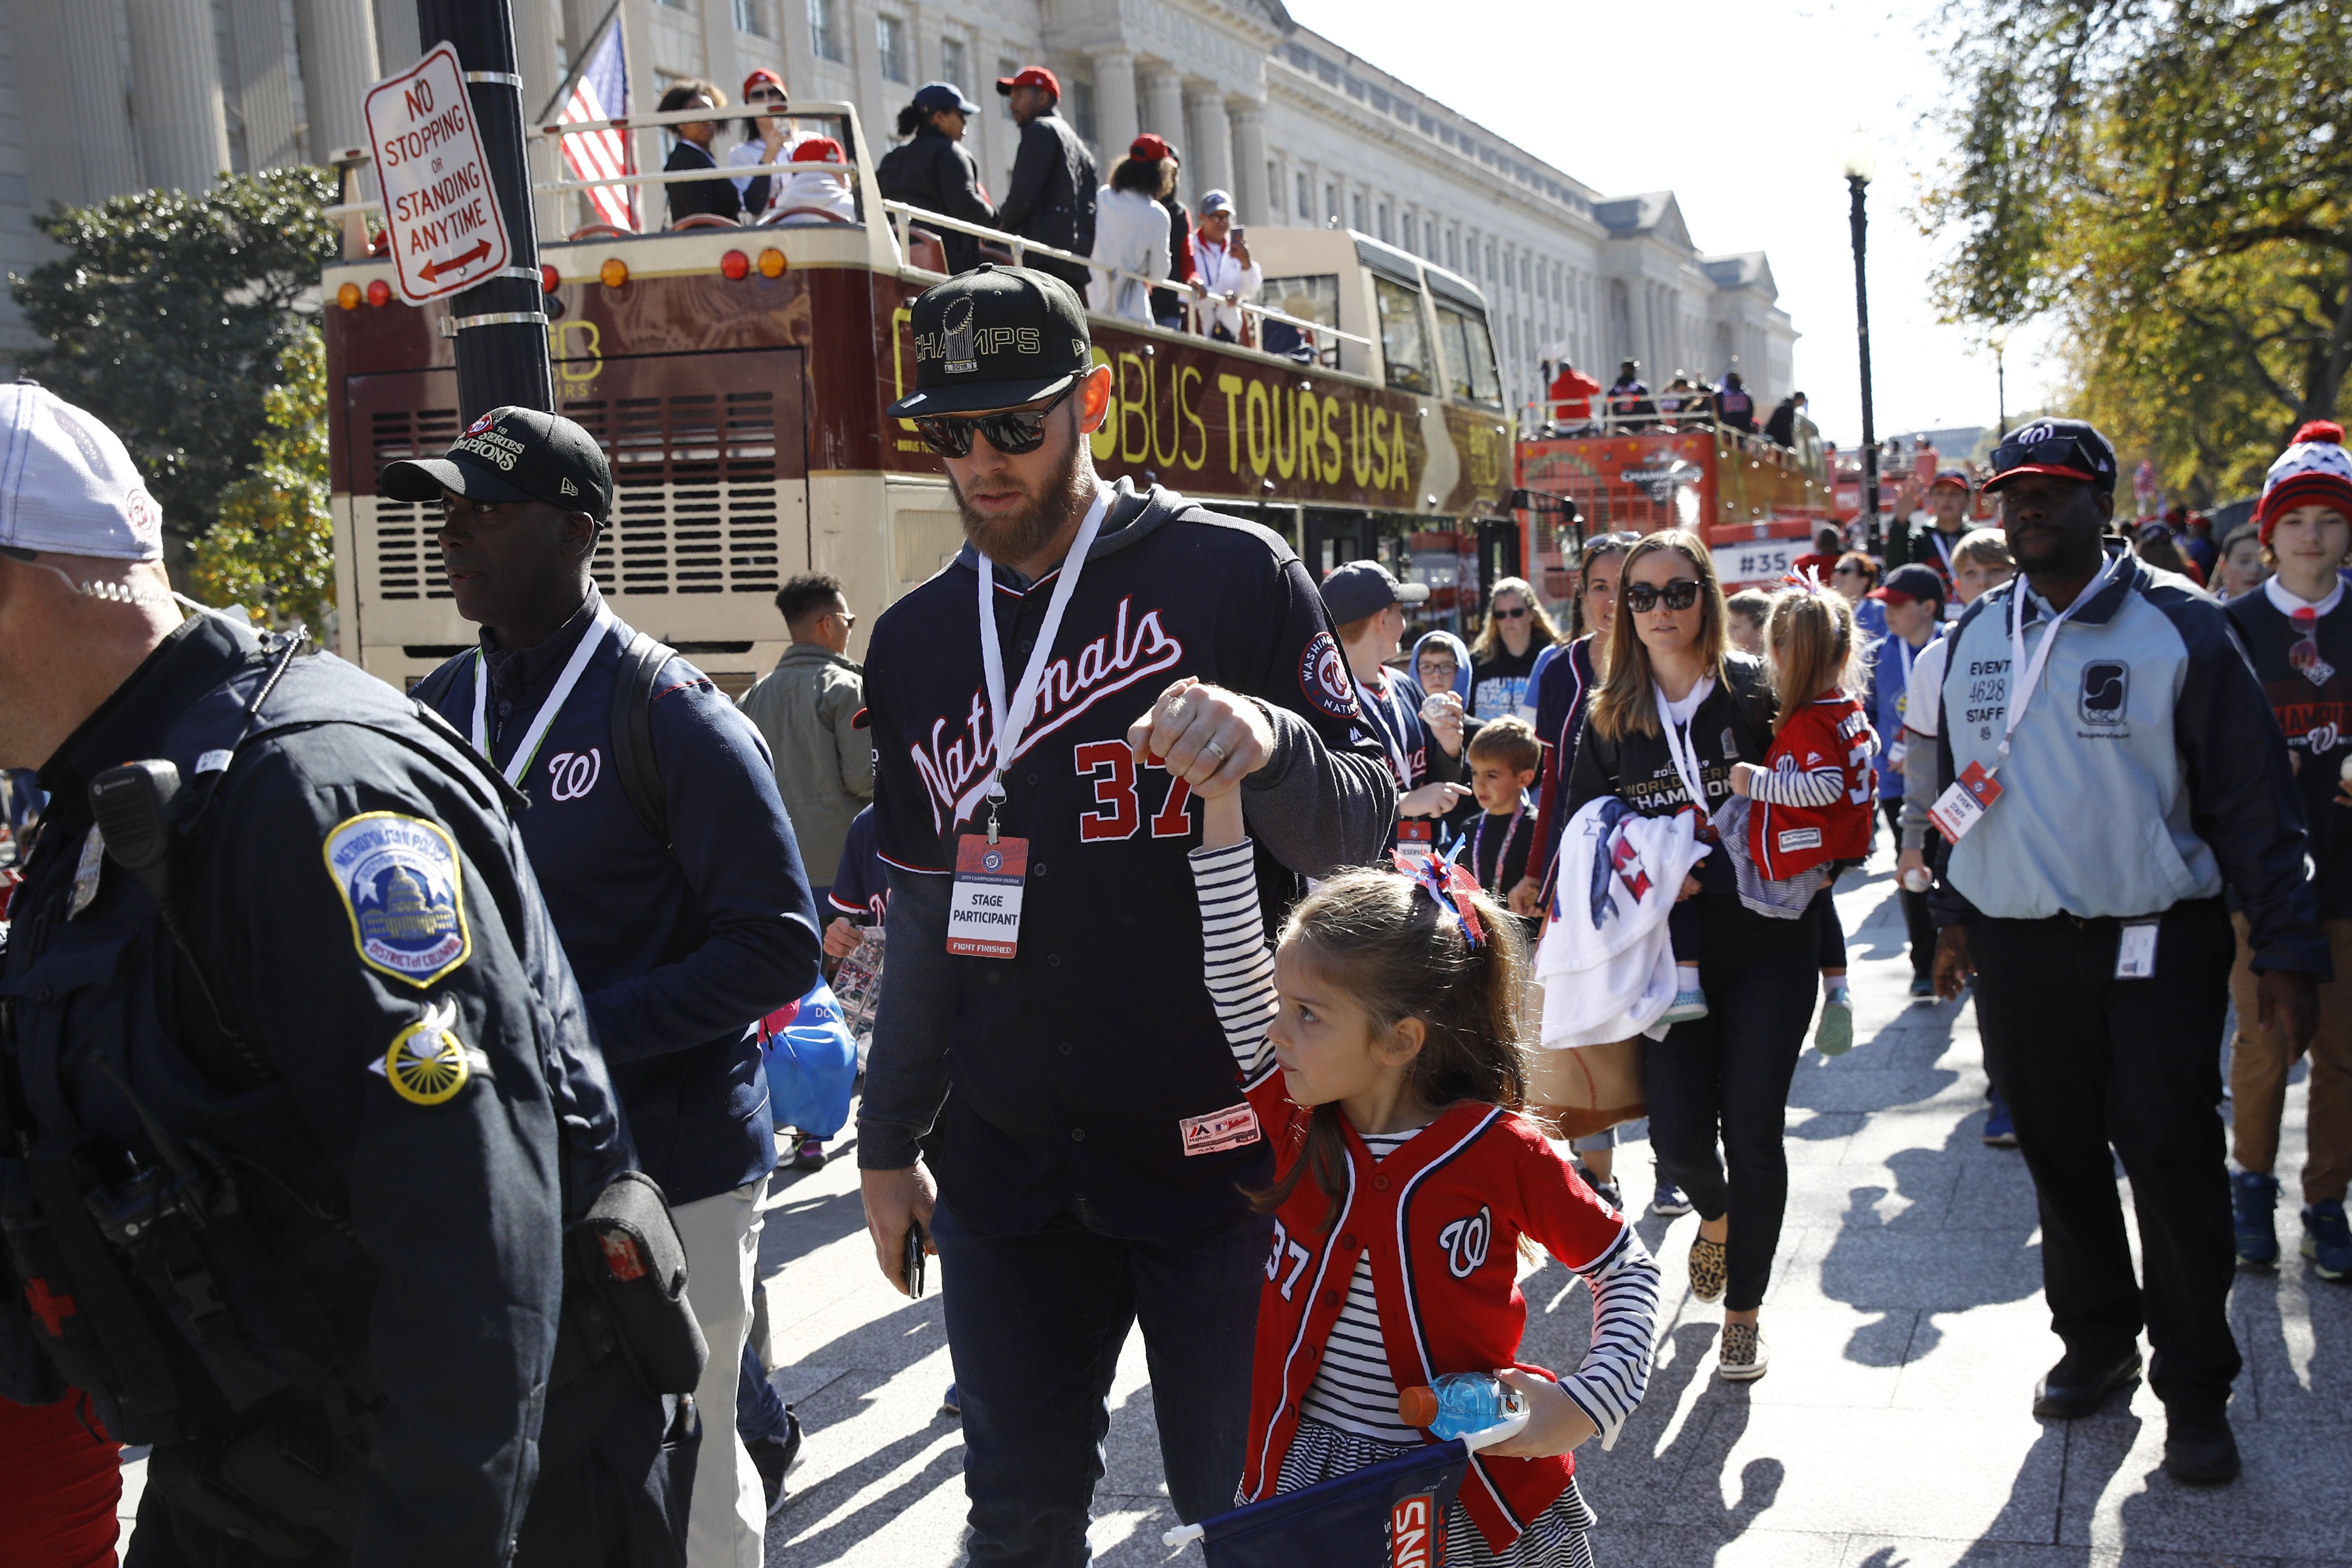 Thousands celebrate Washington Nationals World Series championship at parade,  rally